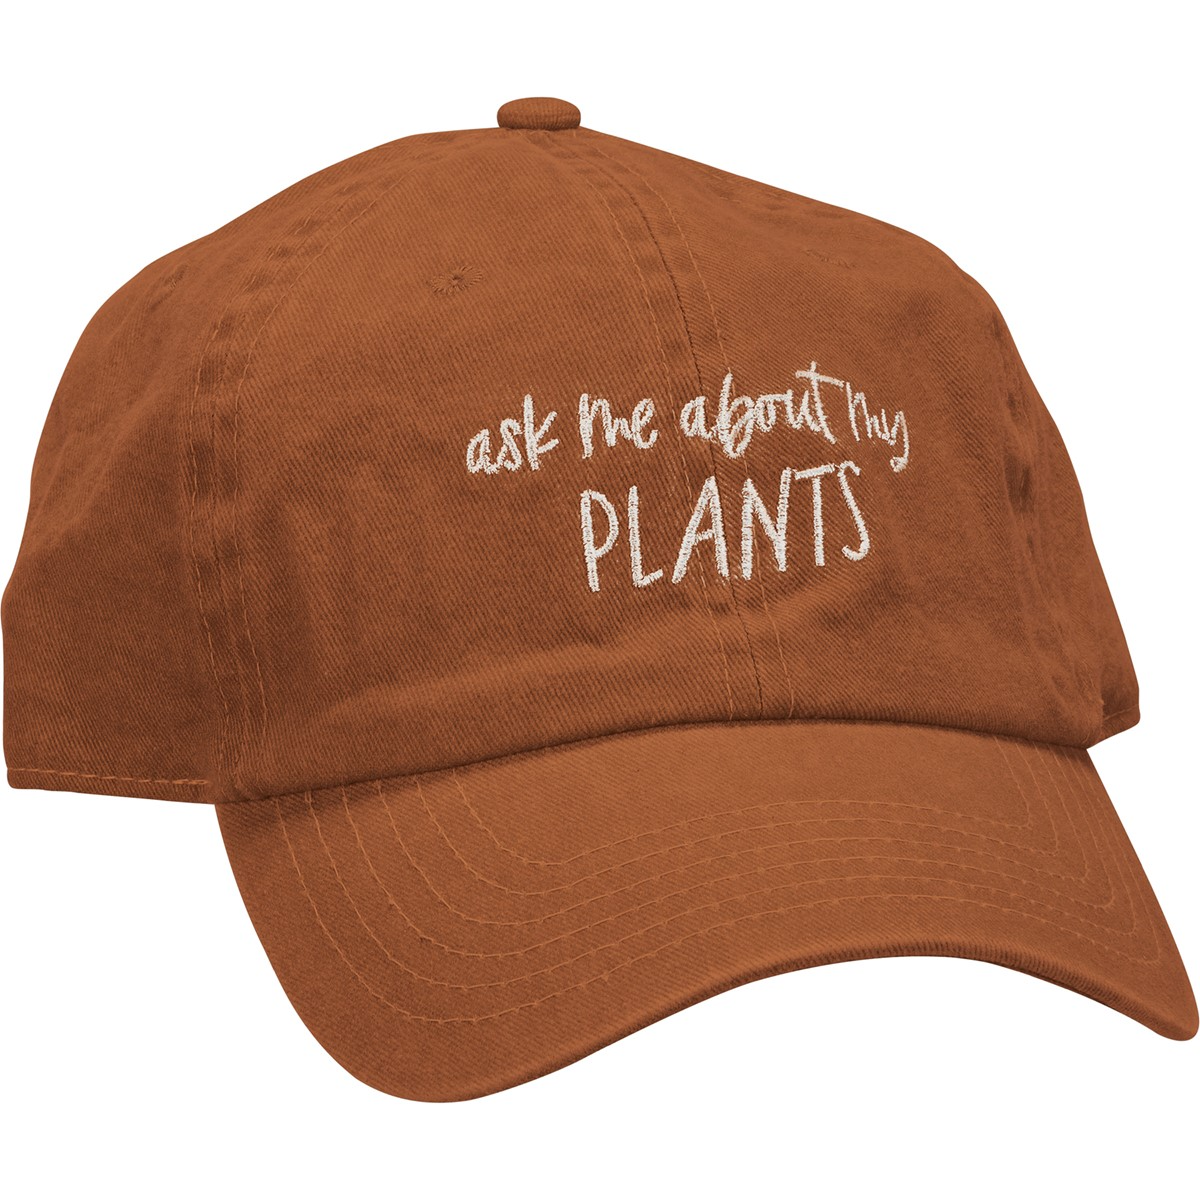 “My Plants” Baseball Cap